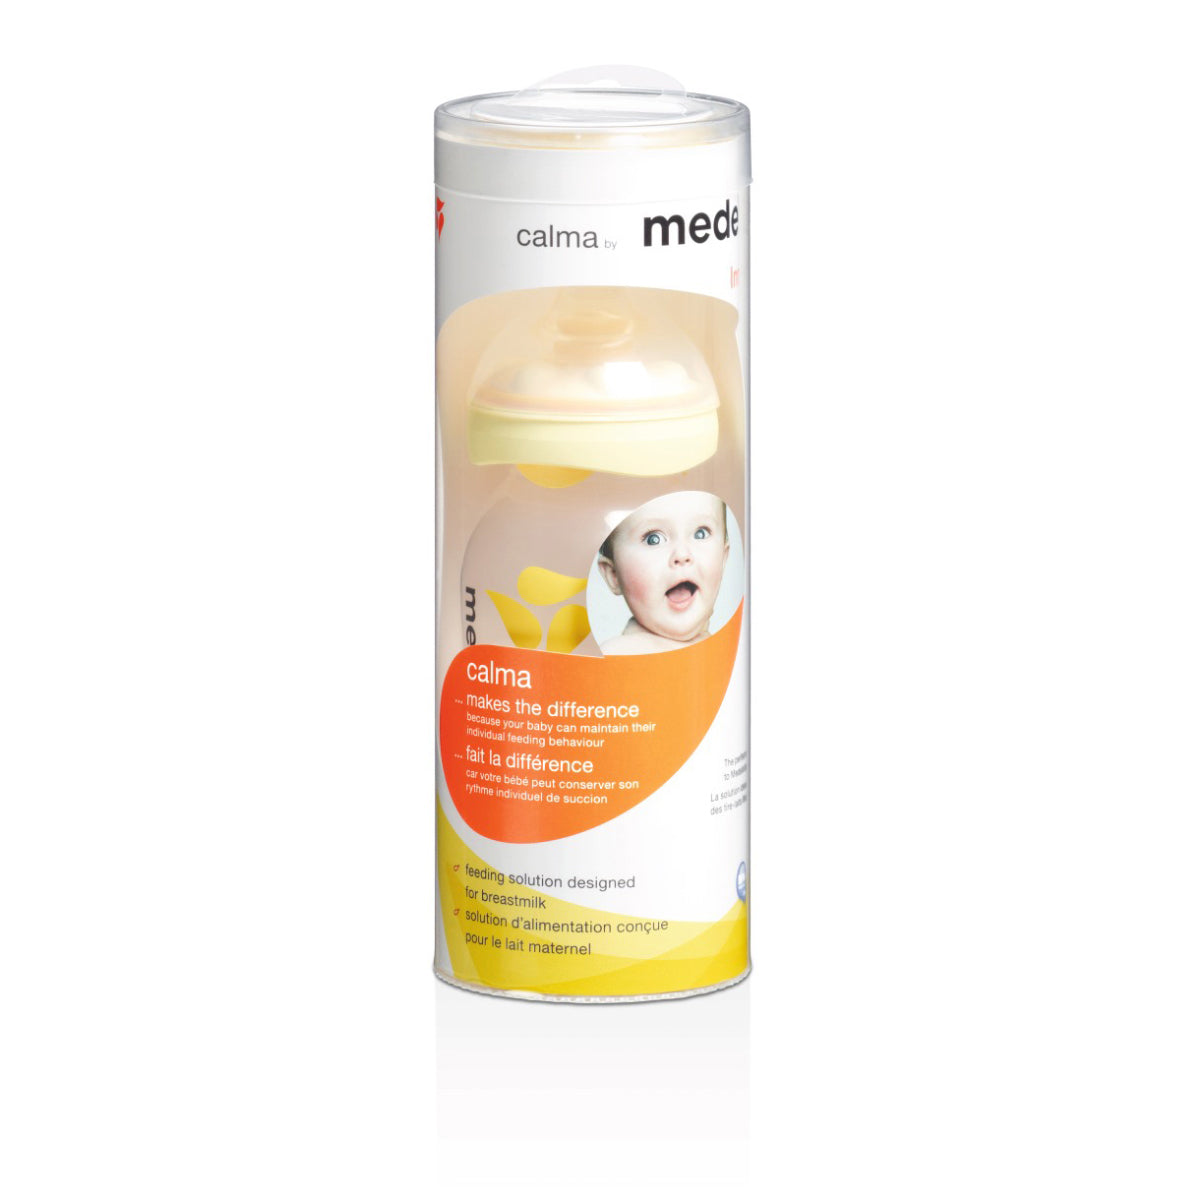 medela-calma-with-150-ml-breast-milk-bottle